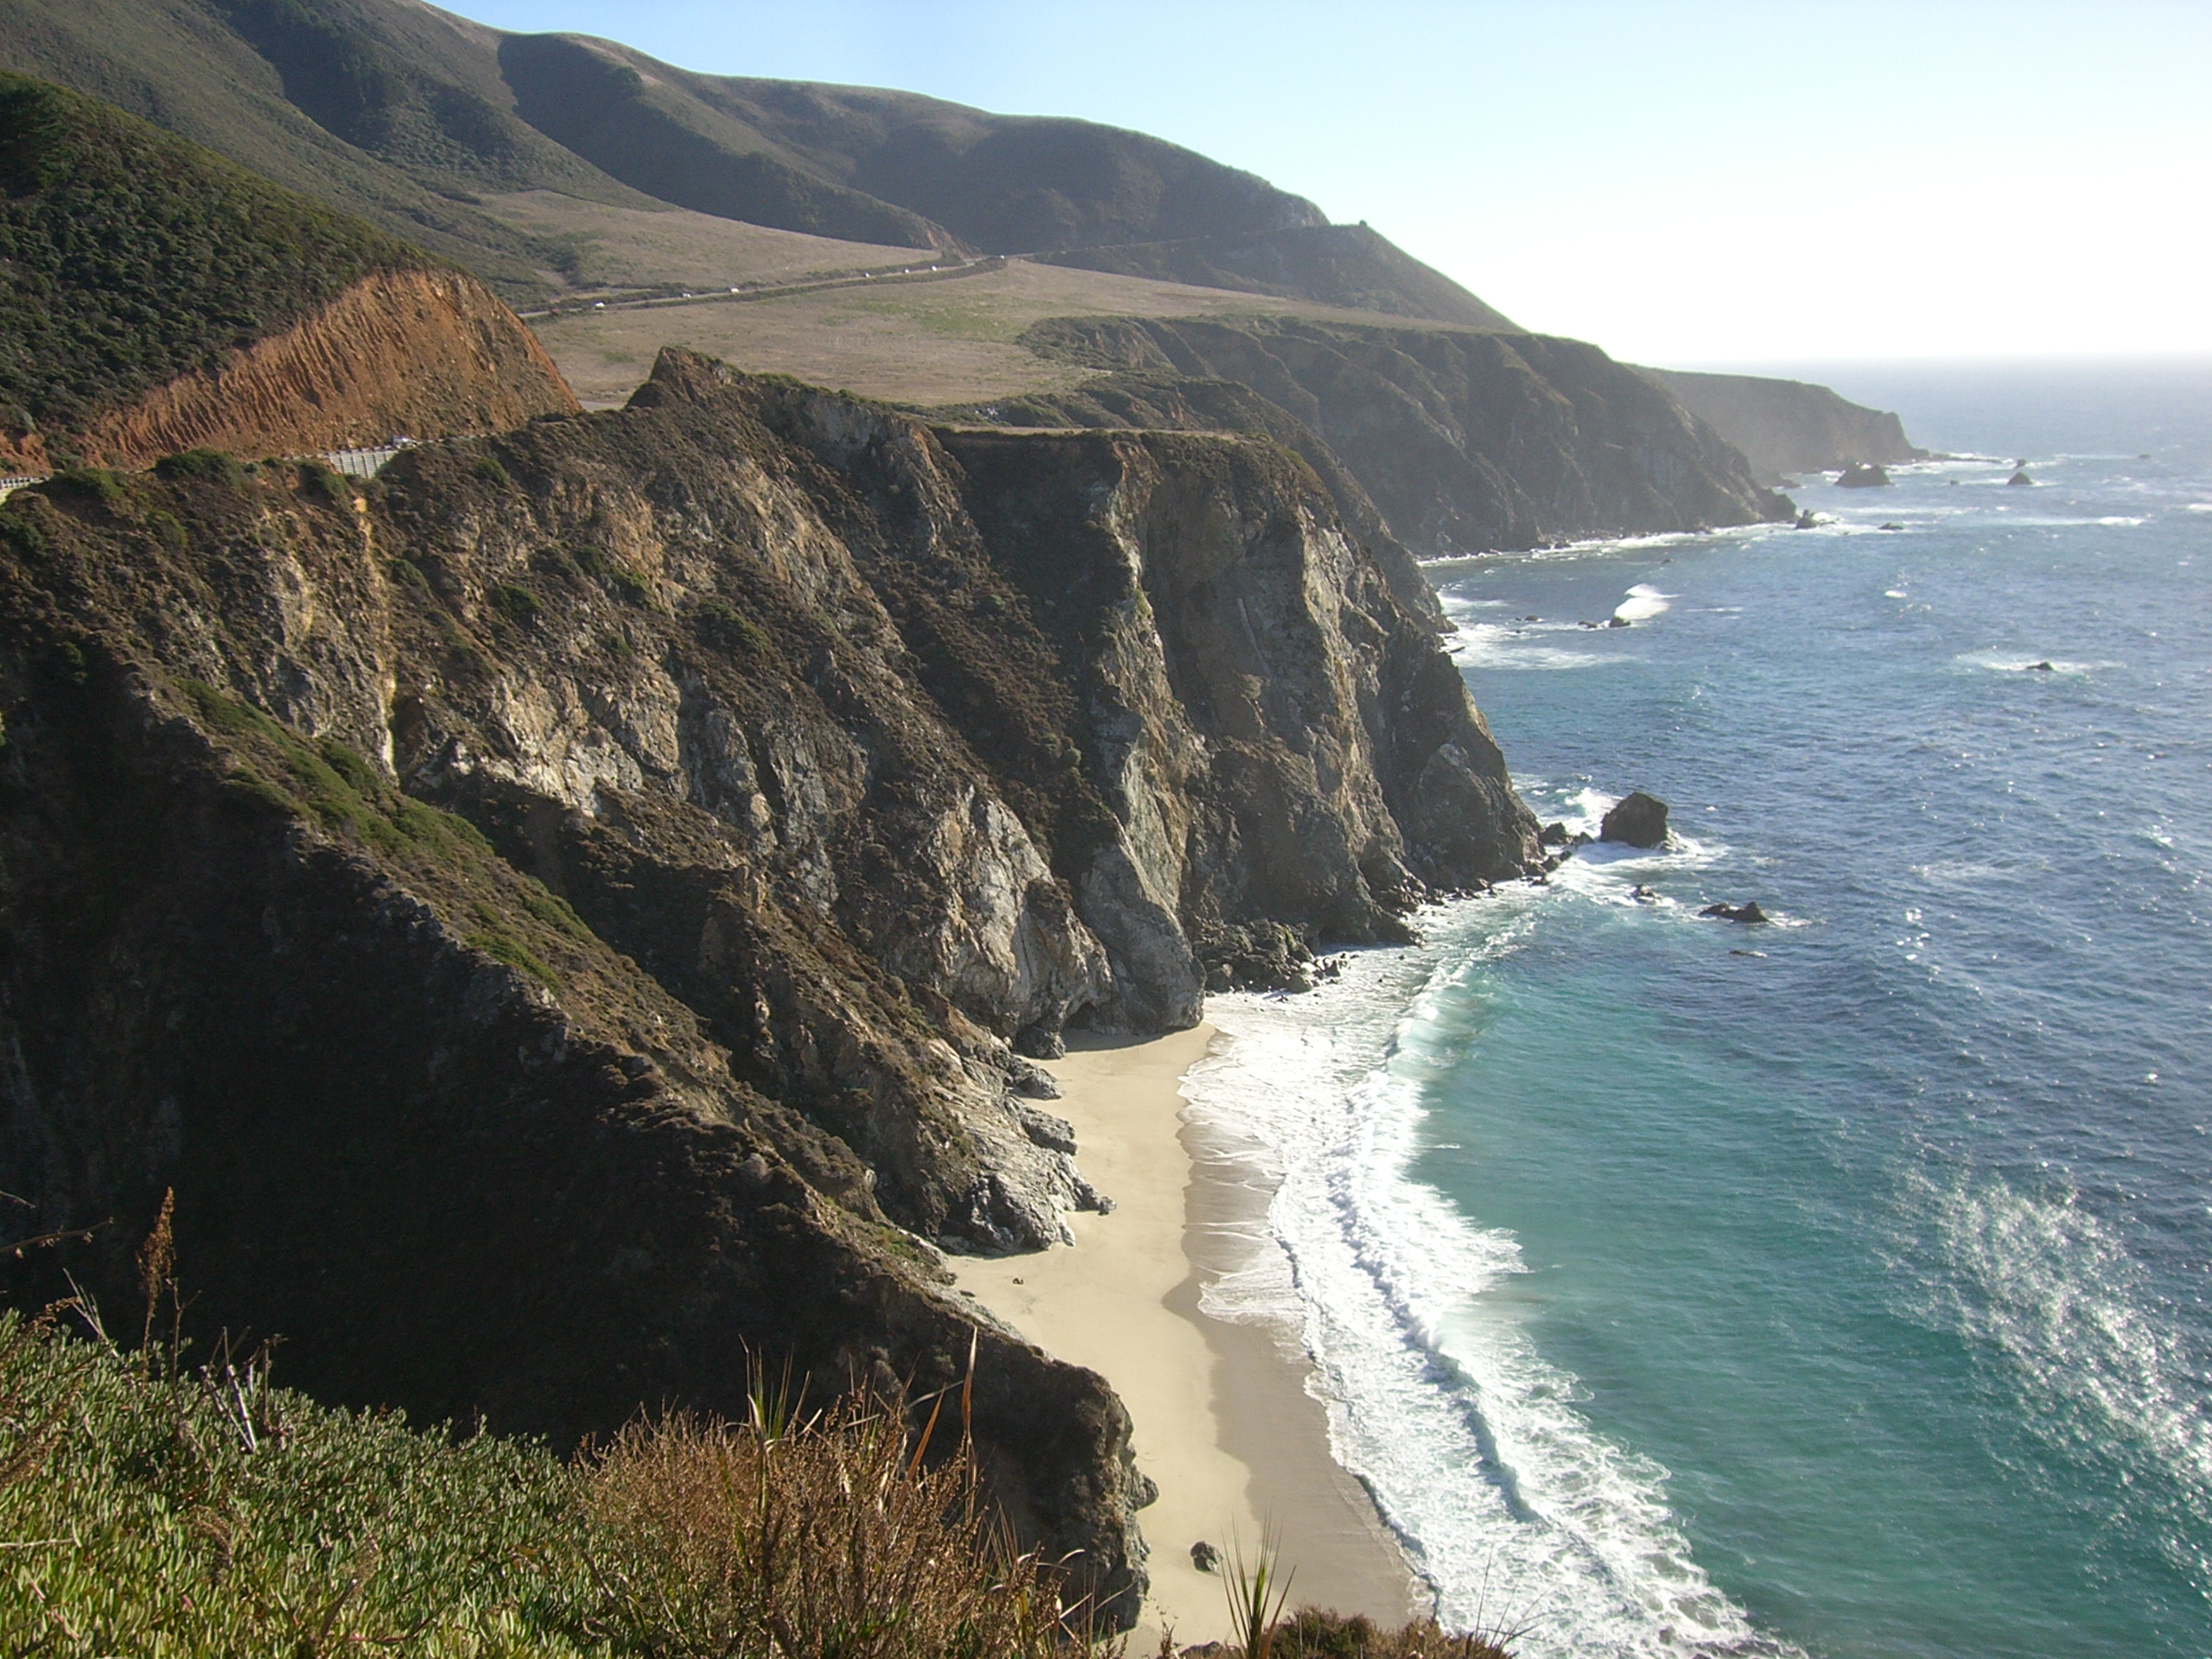 Situated on the coast. Калифорния Highway 1. Тихоокеанское побережье отели. Coast. Coastal ranges.